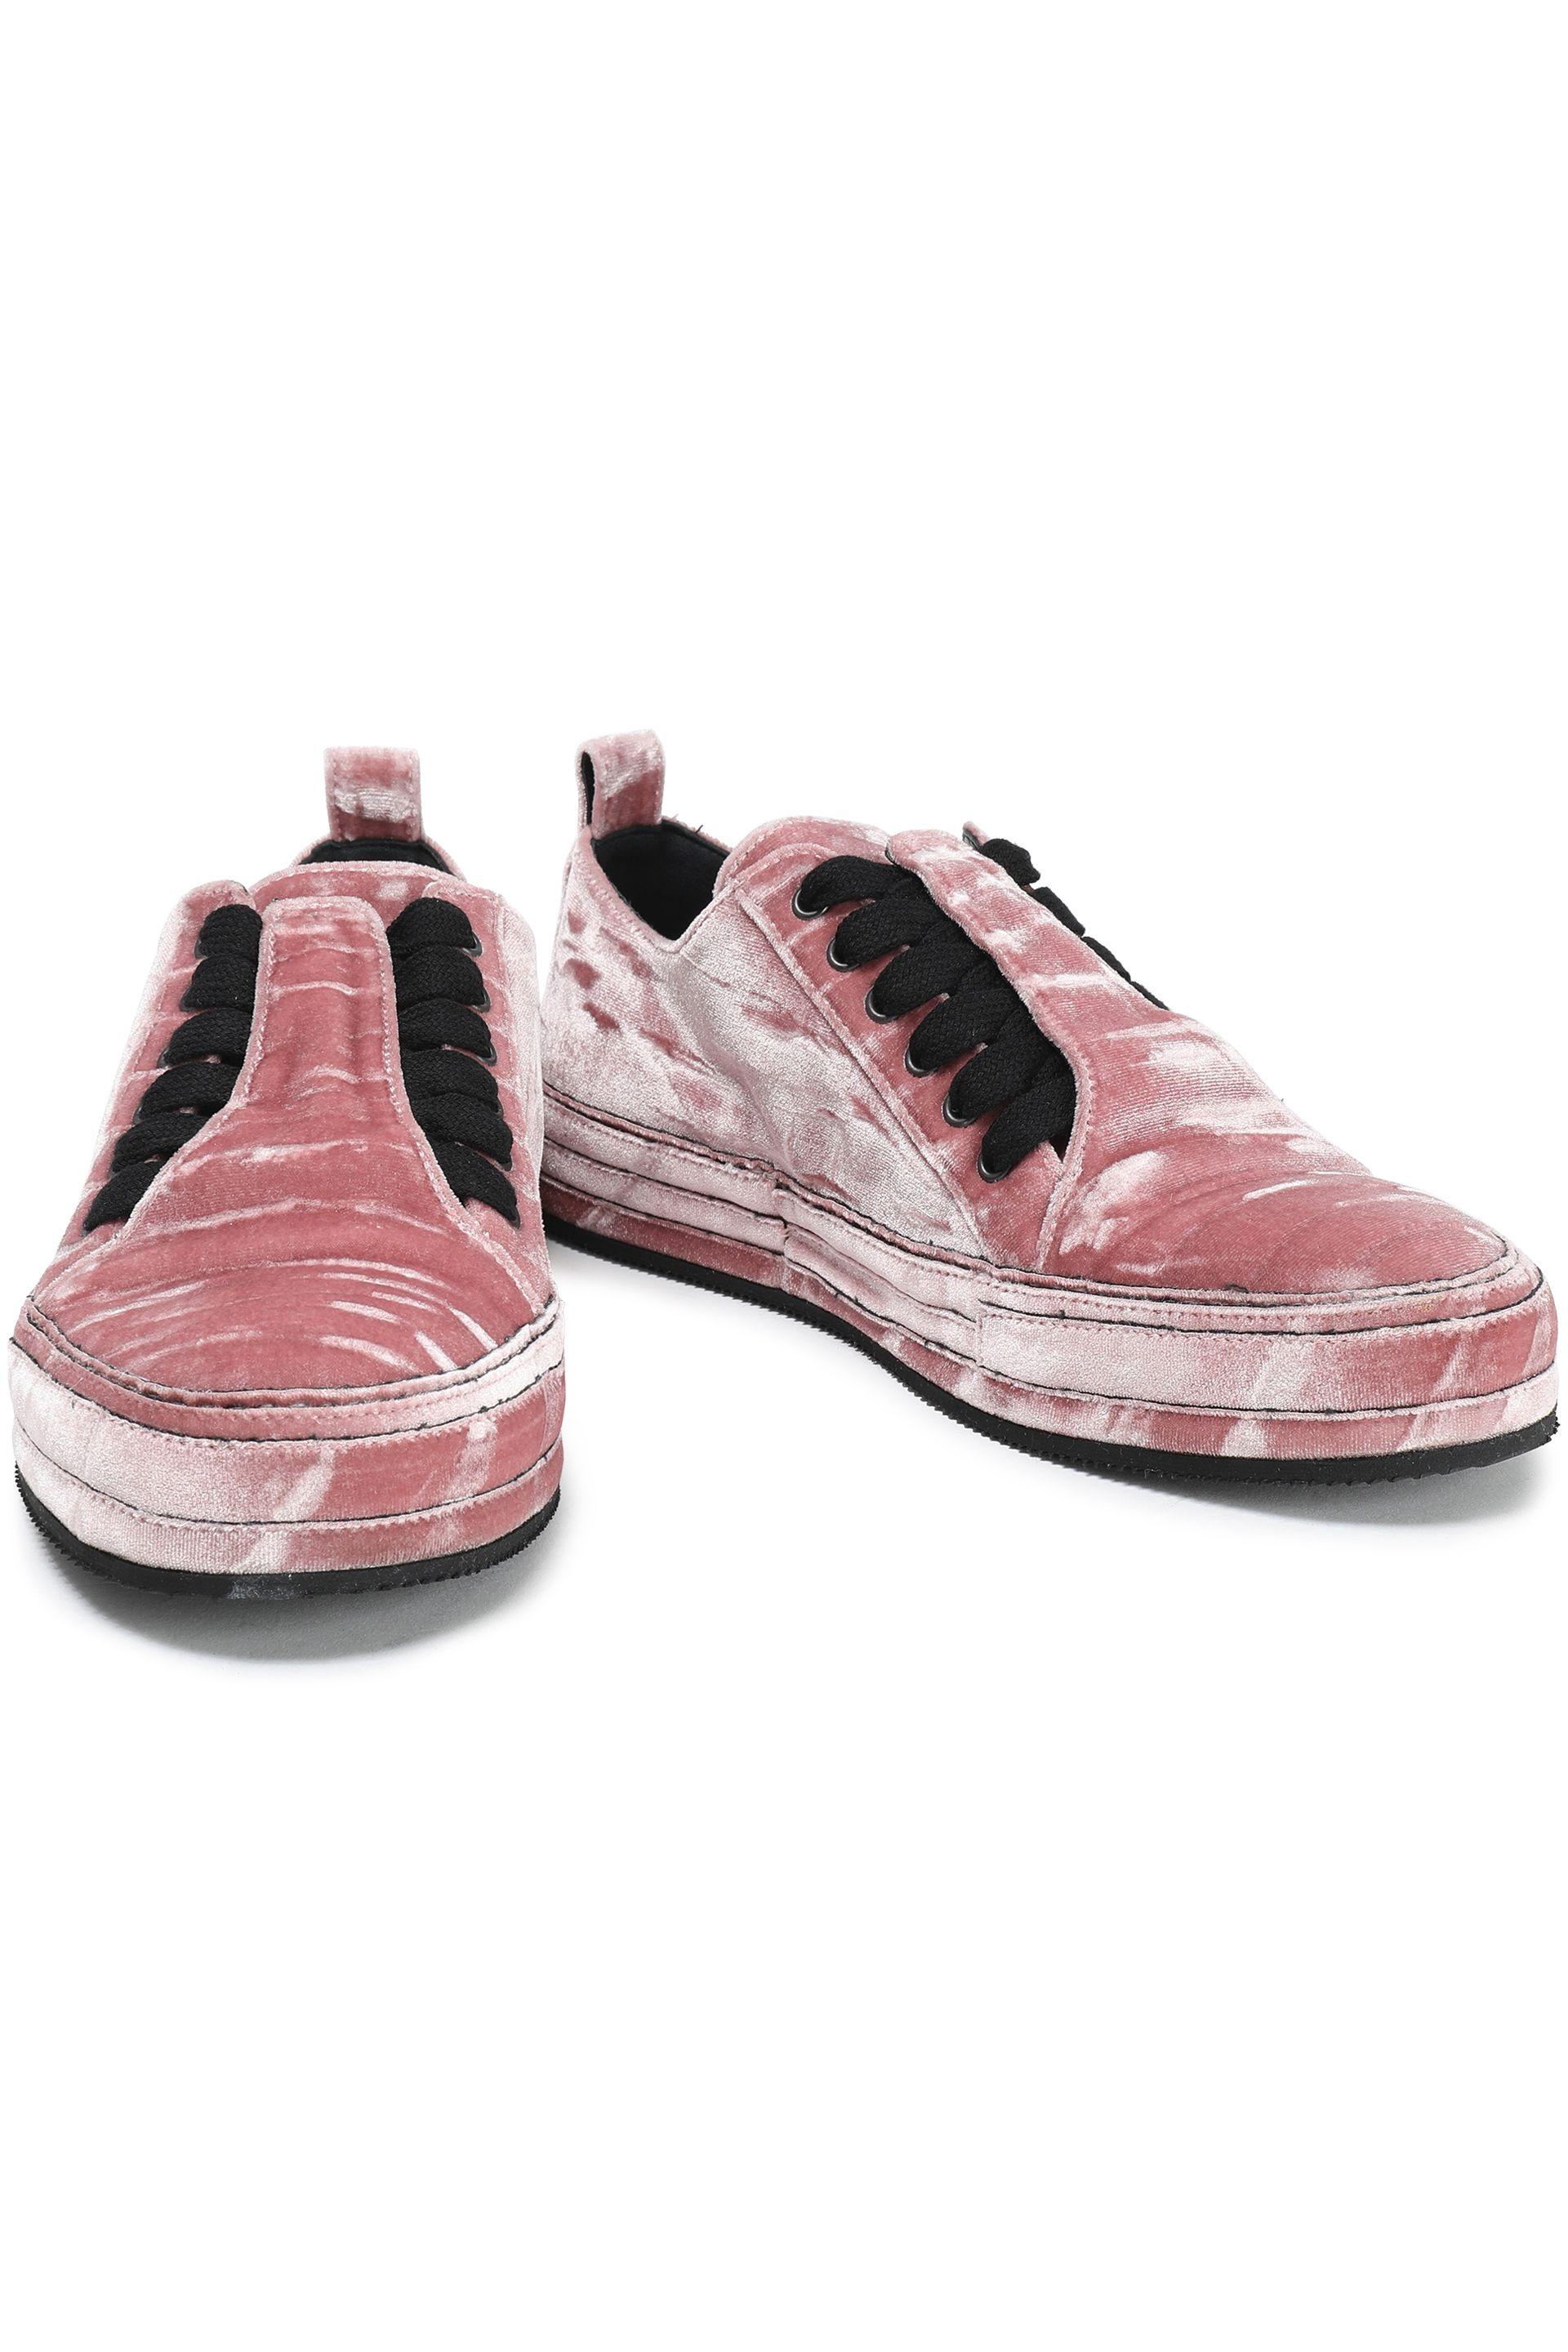 Ann Demeulemeester Crushed Velvet Sneakers Blush In Pink Lyst 